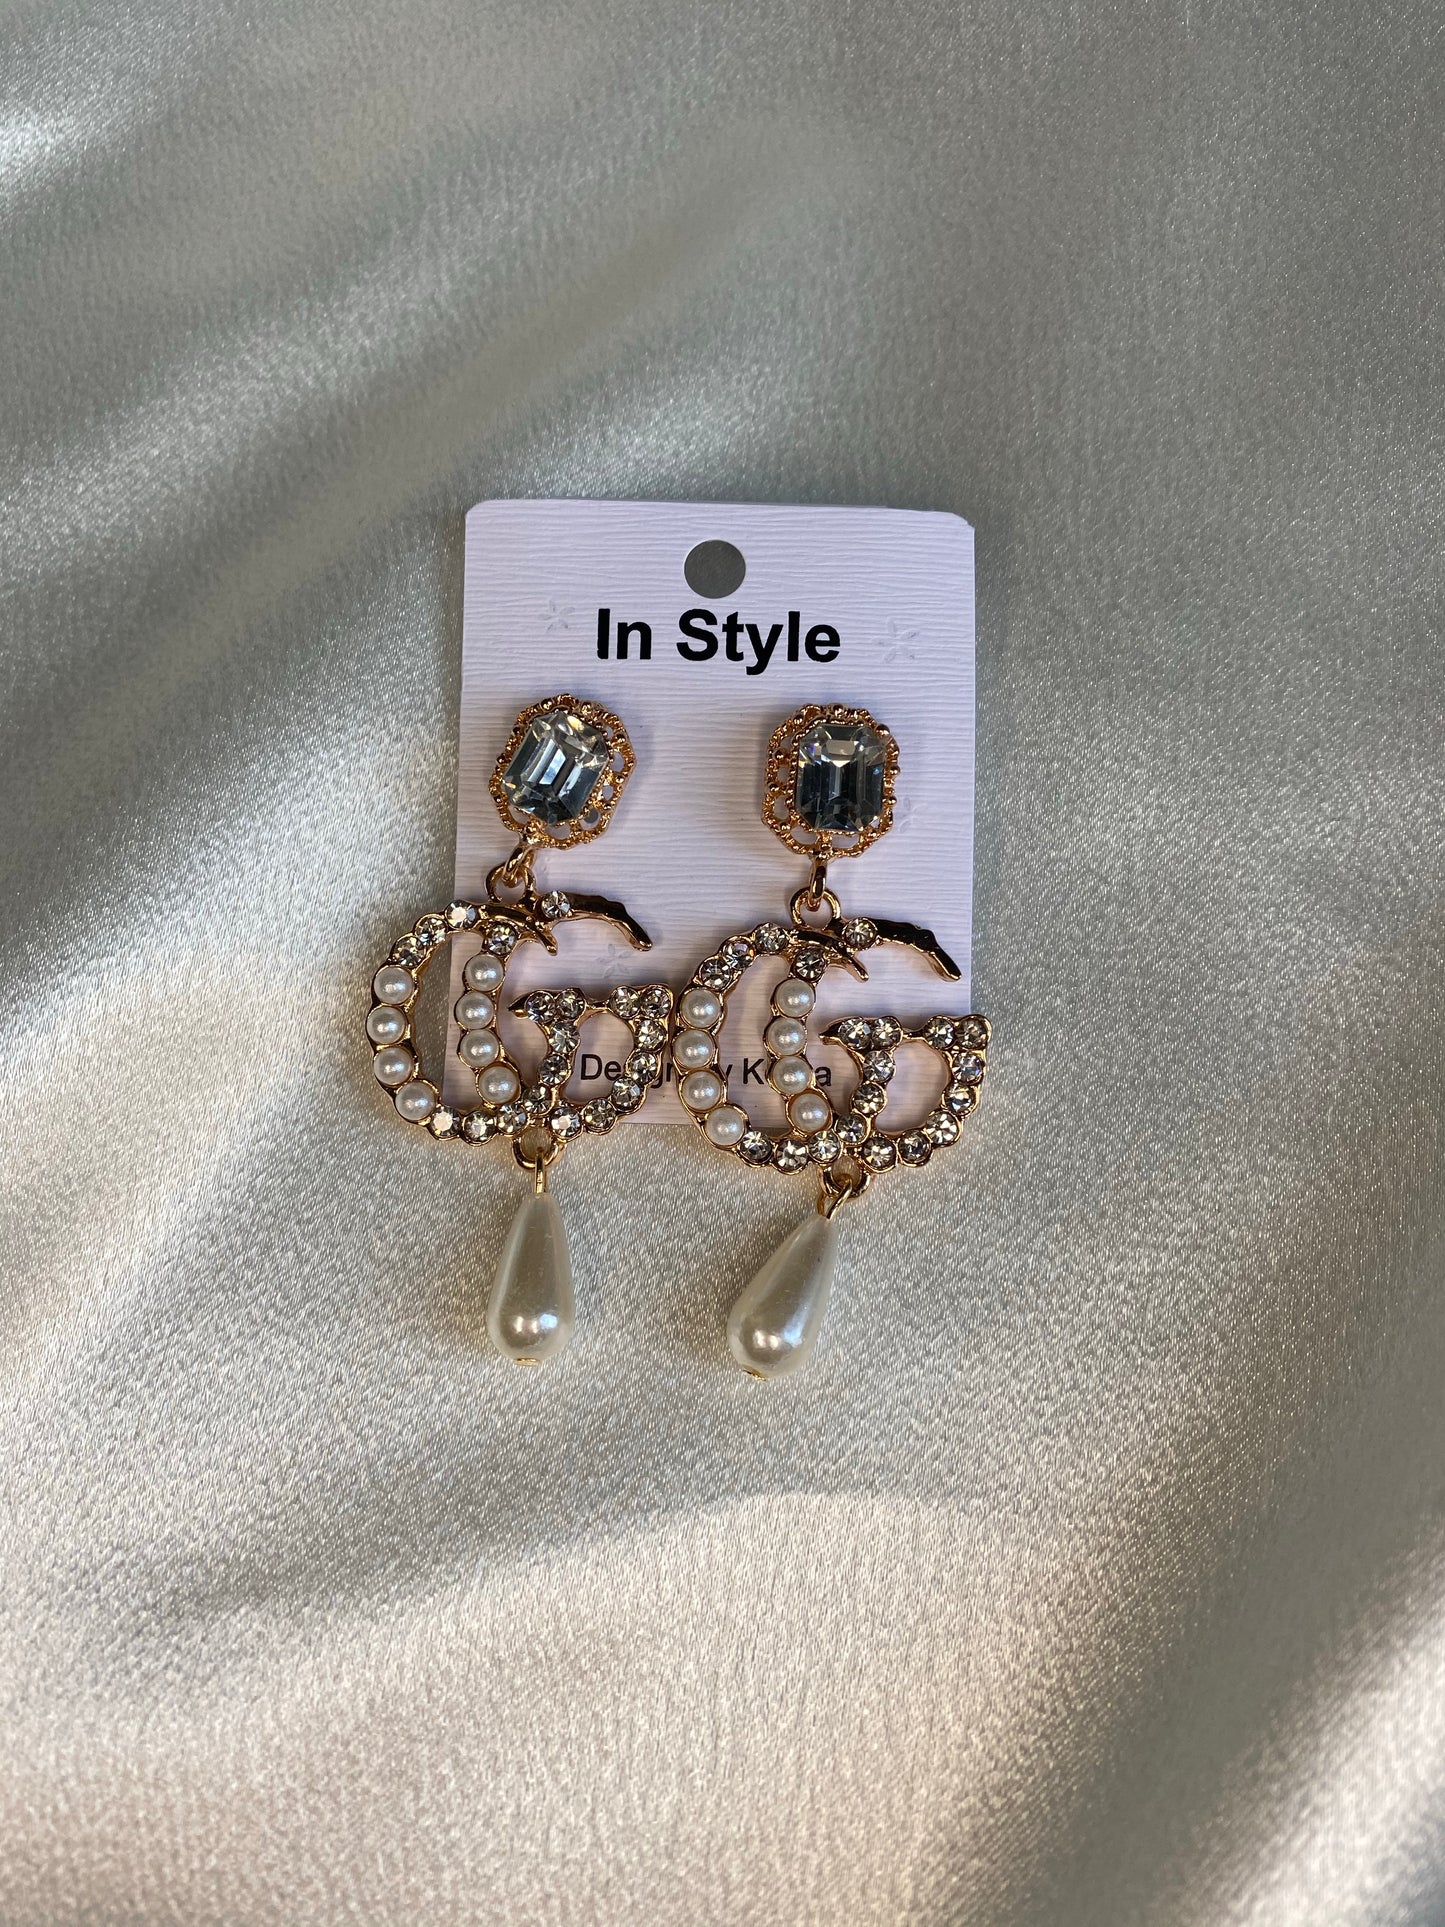 Silver inspired earrings